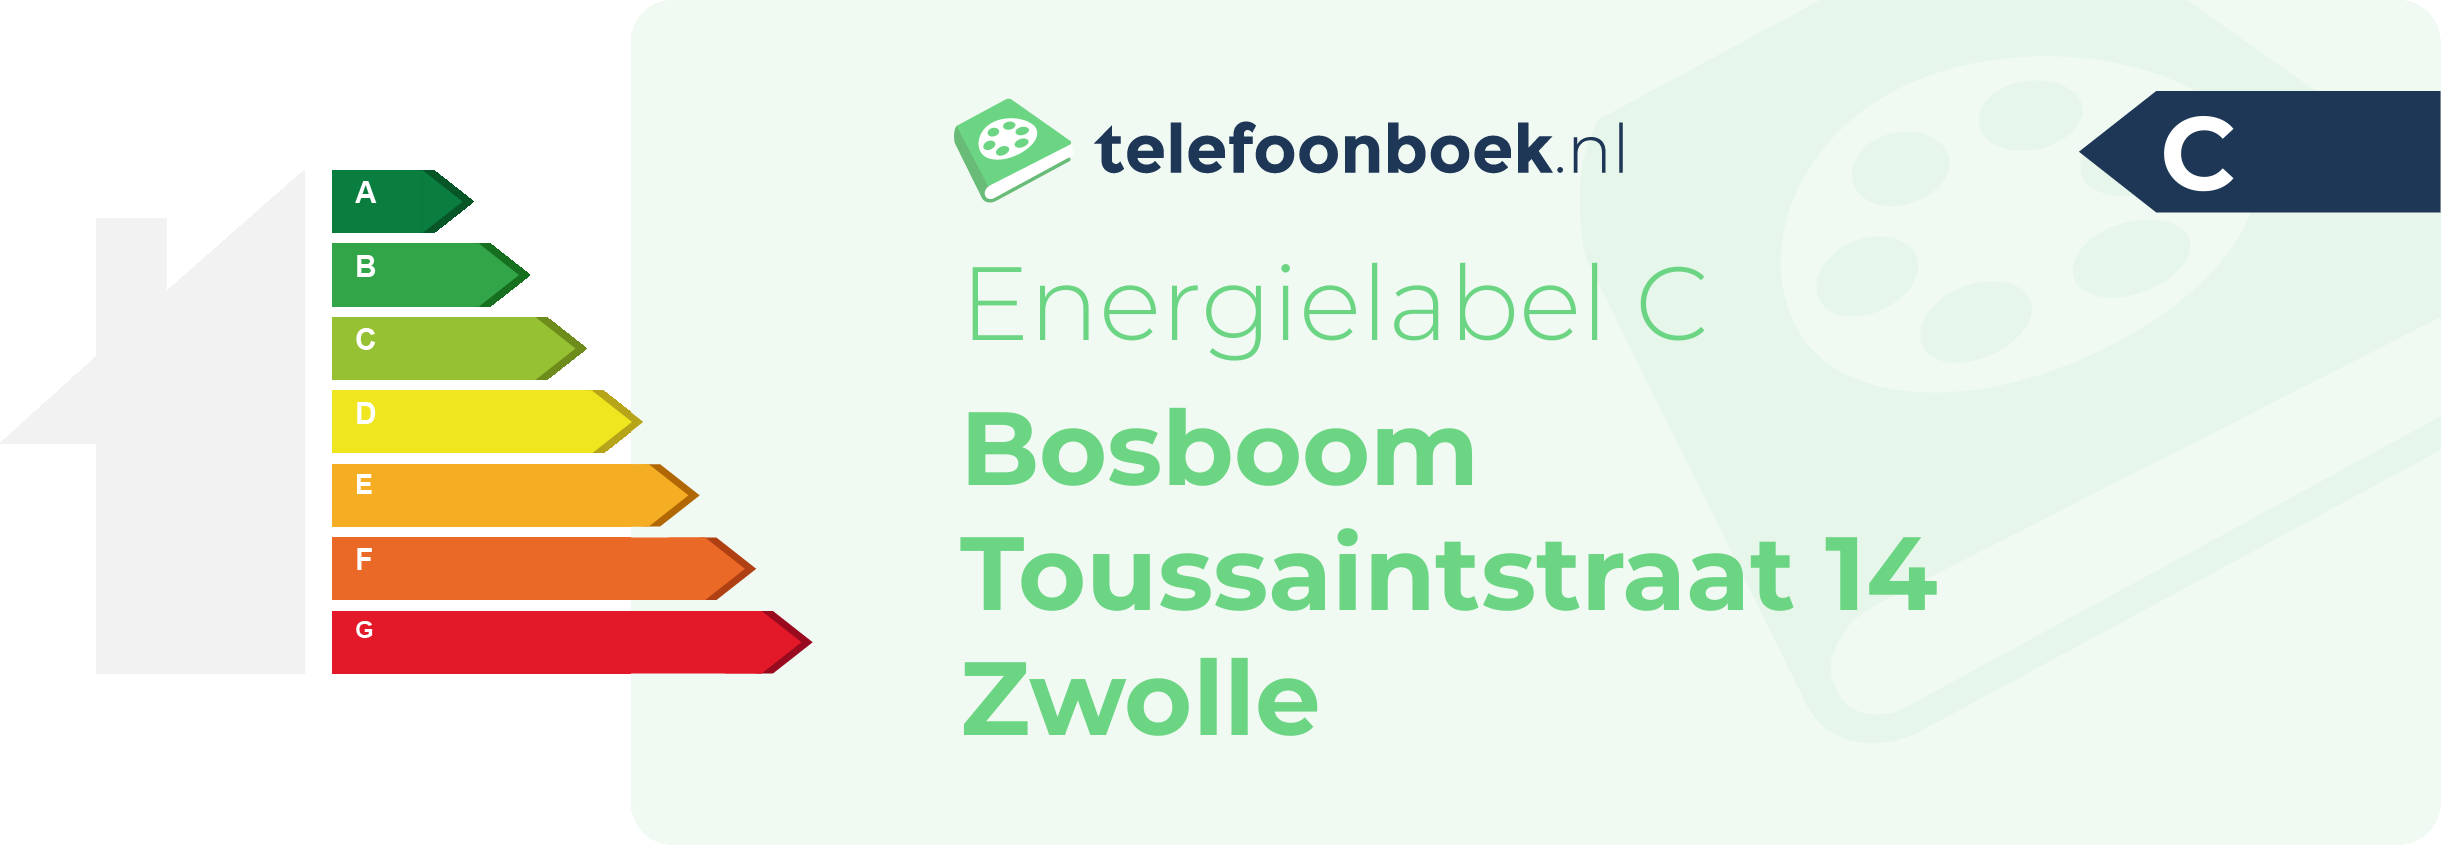 Energielabel Bosboom Toussaintstraat 14 Zwolle